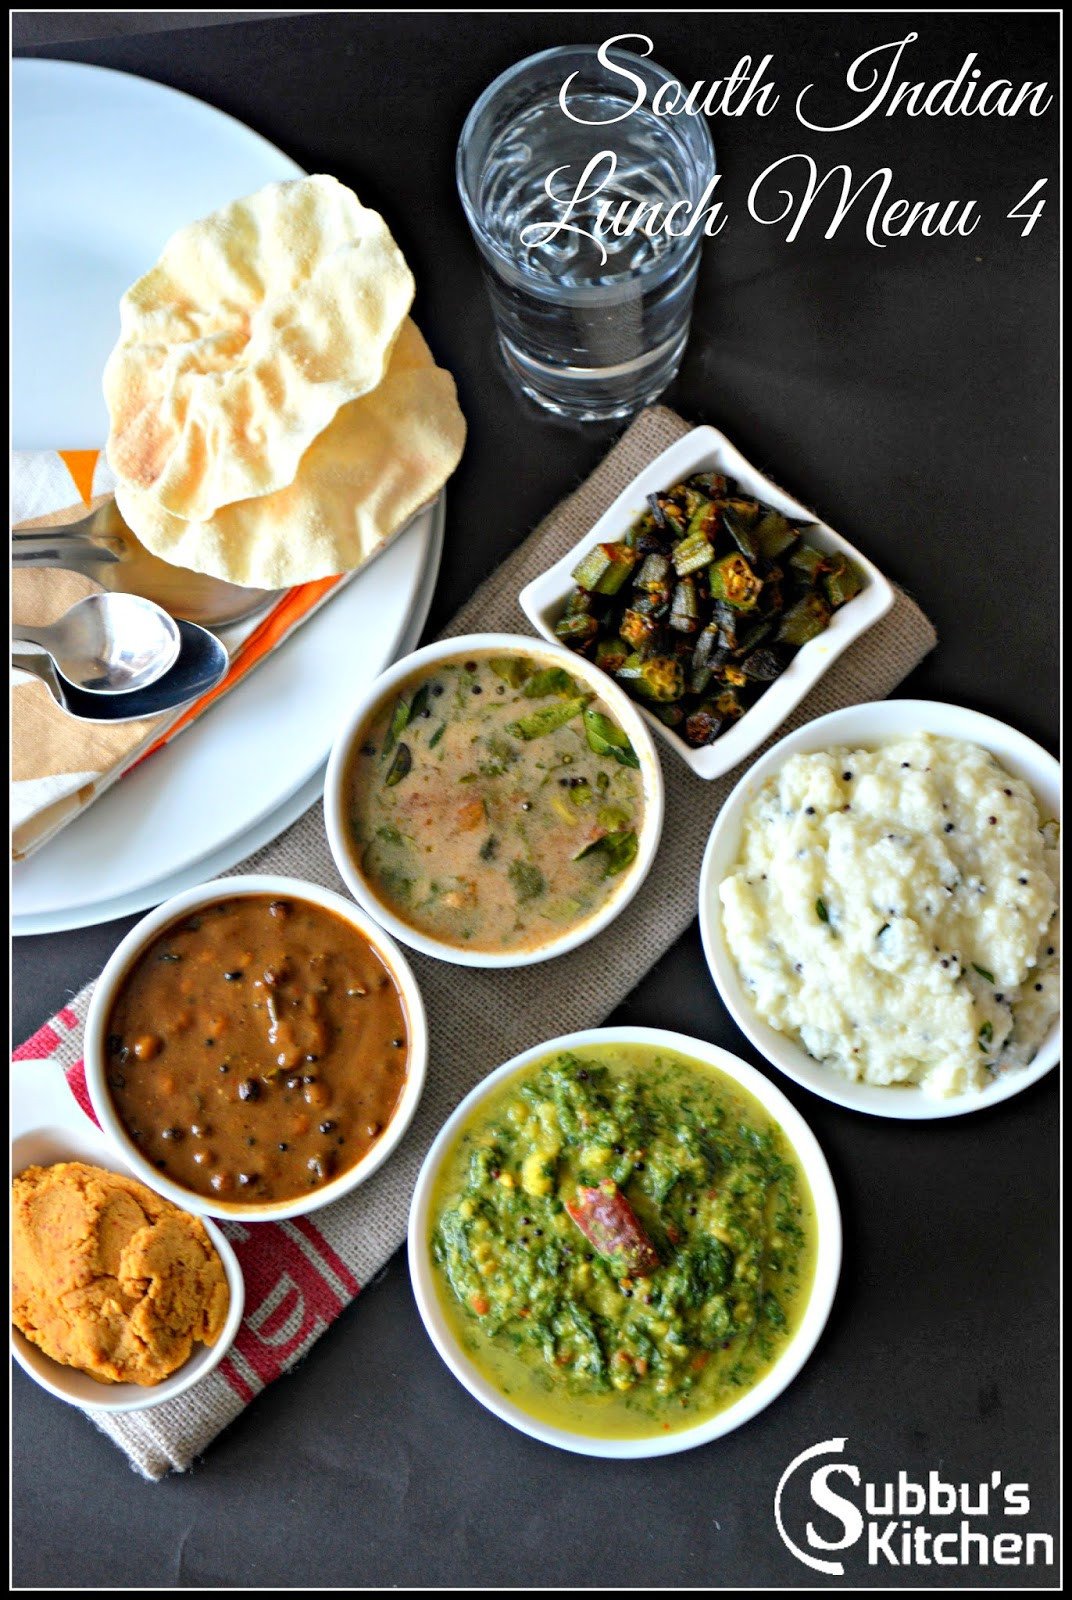 South Indian Dinner Ideas
 South Indian Lunch Menu 4 Vathakuzhambu Araitha Rasam